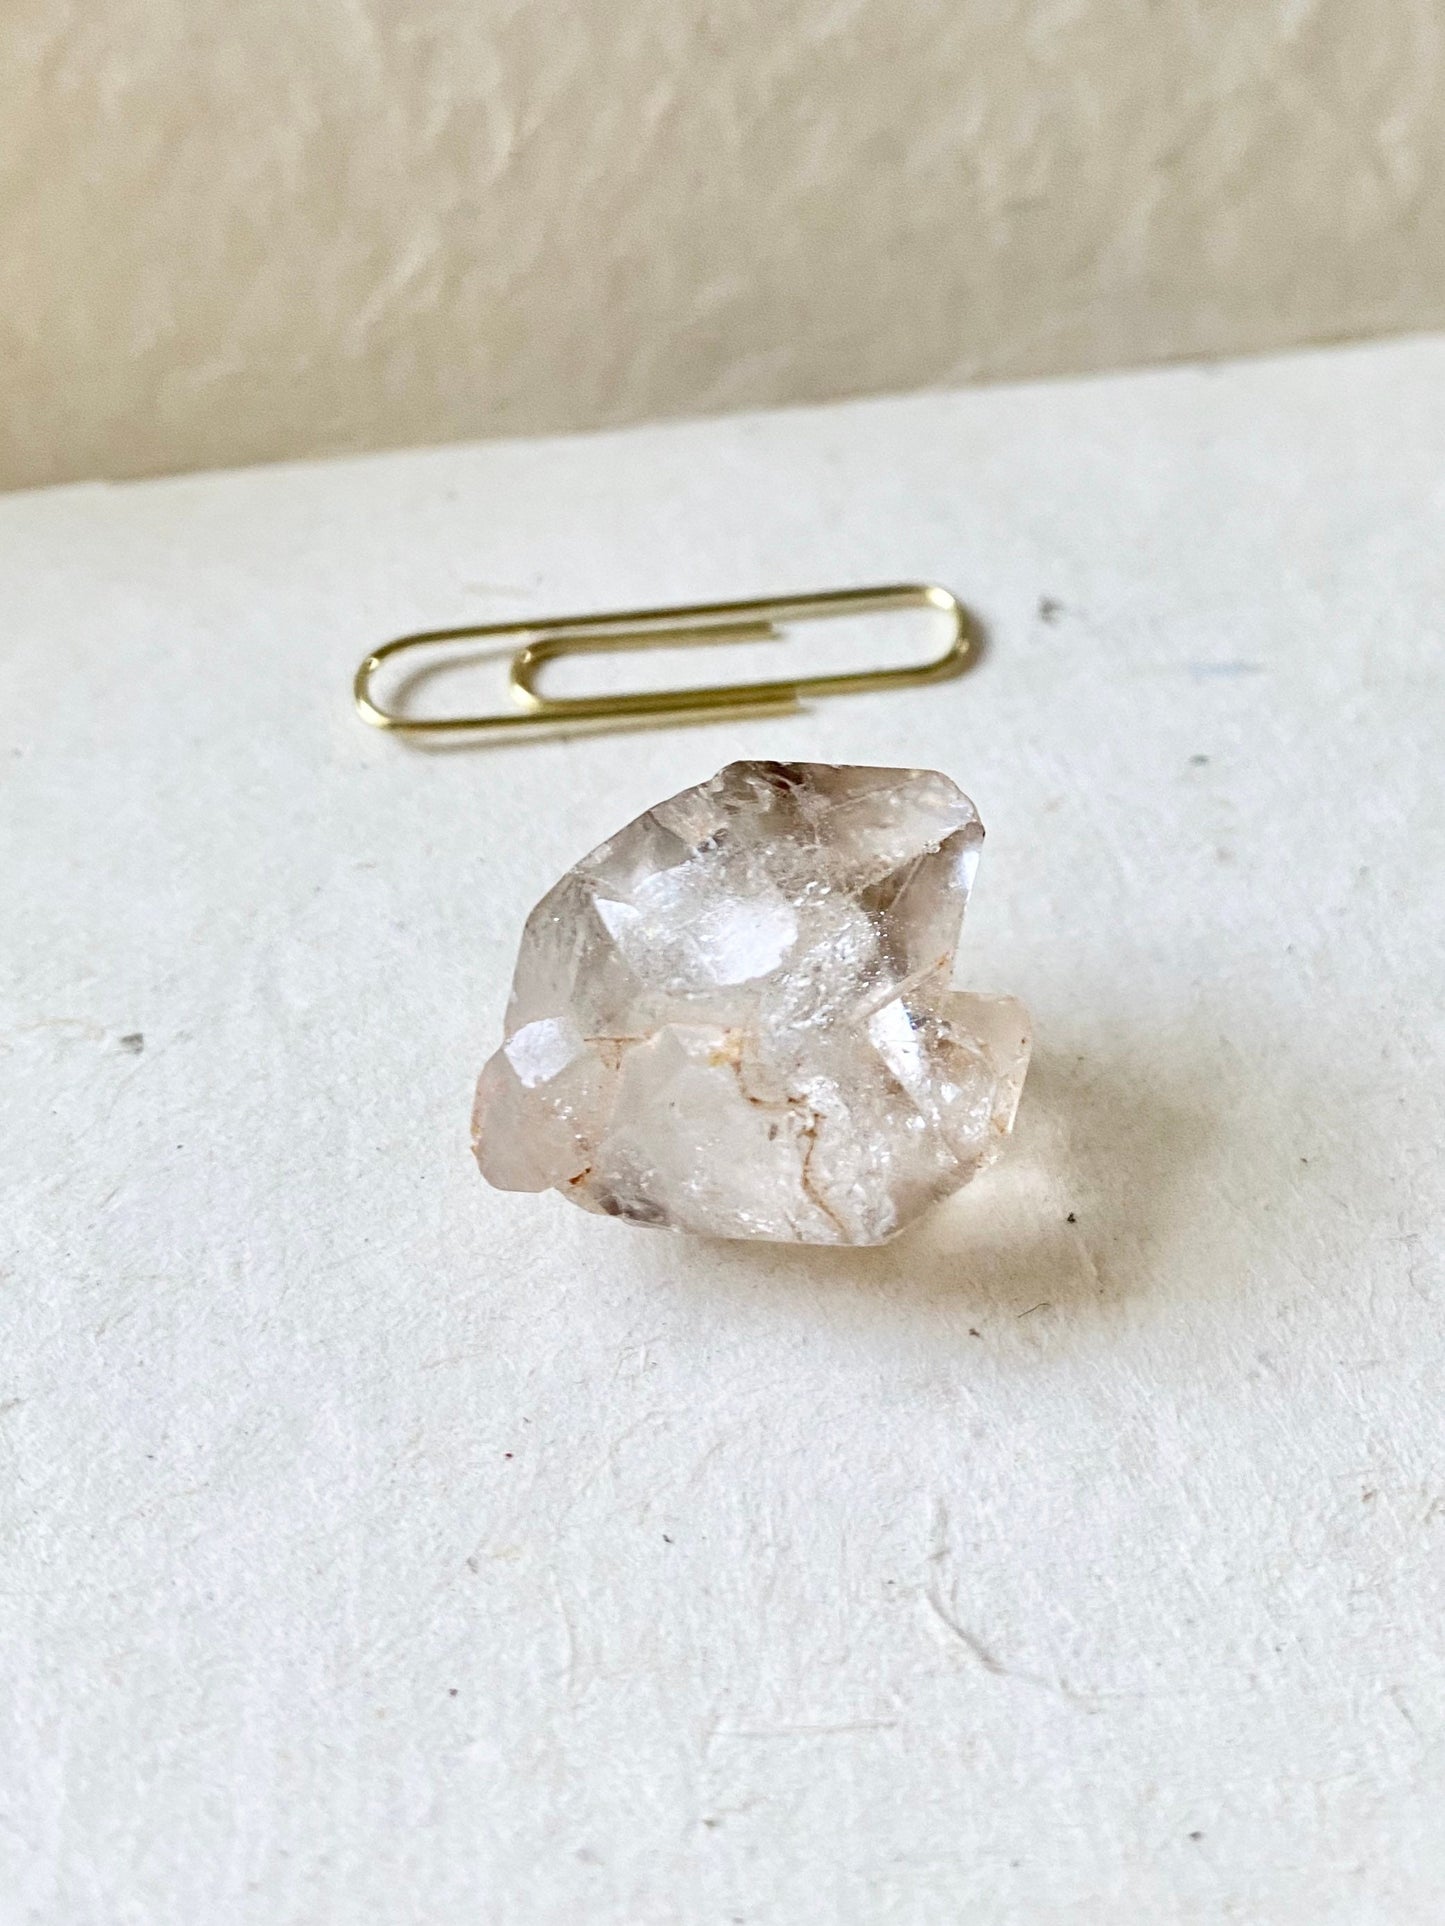 Clear Quartz “Diamond” Crystal Point from Forward Mine Nigeria - Rock Shop